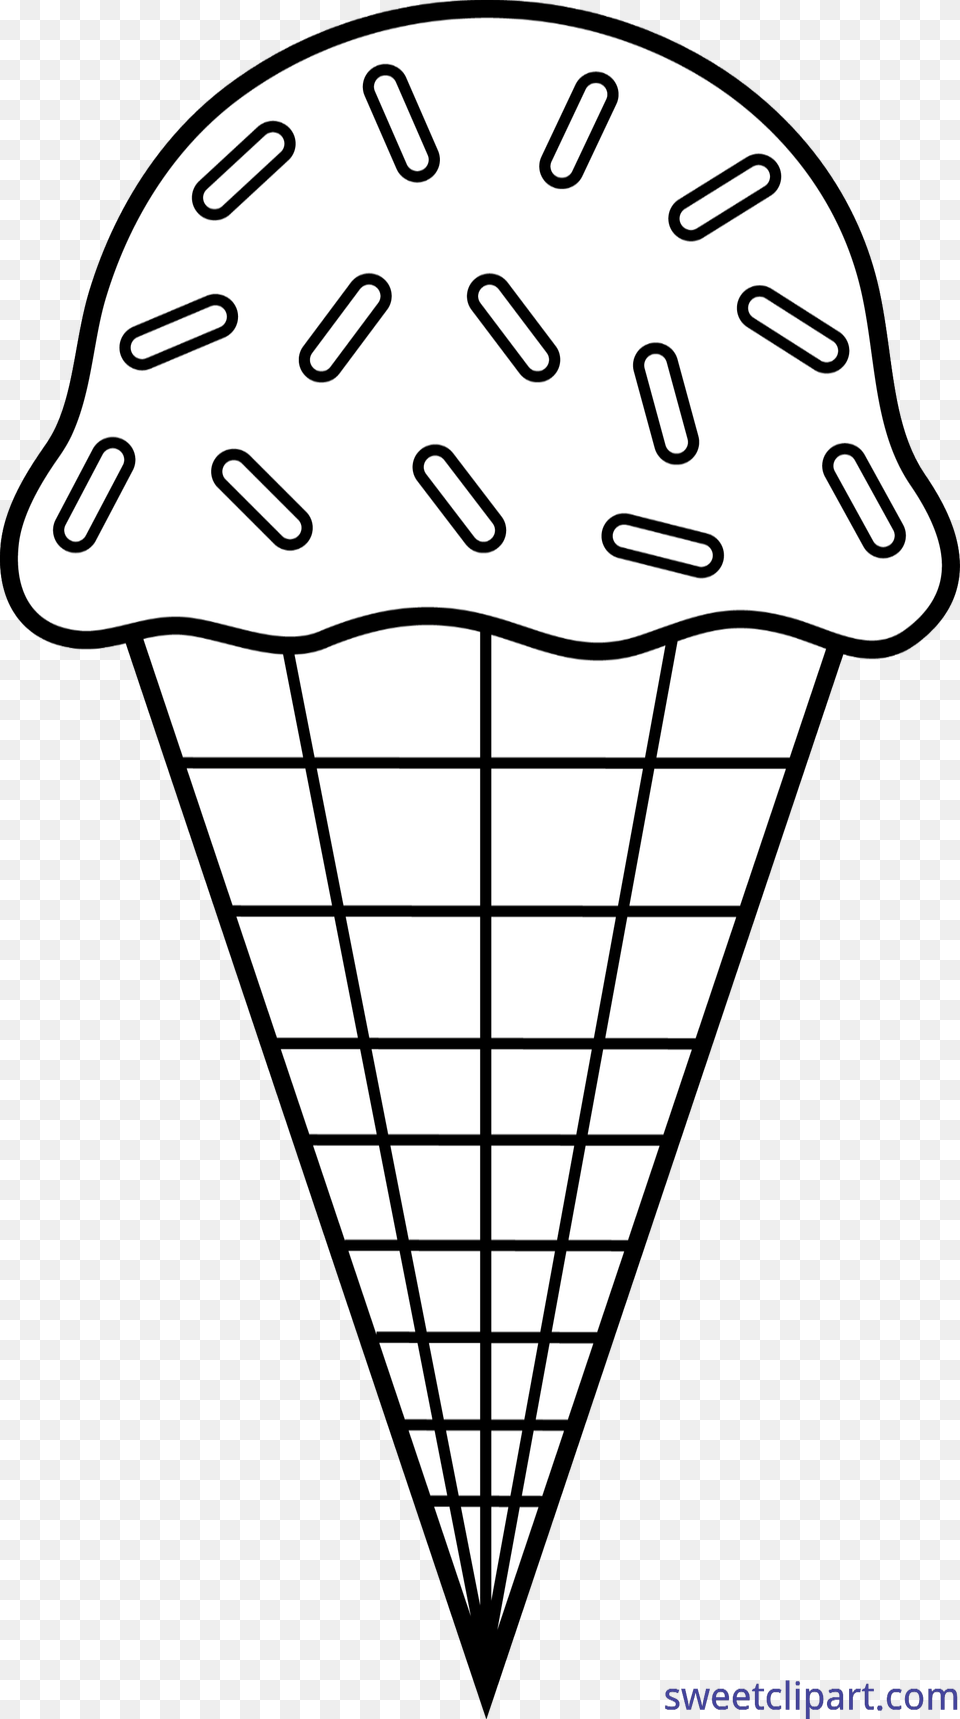 Ice Cream Cone Sprinkles Lineart Clip Art, Dessert, Food, Ice Cream, Face Png